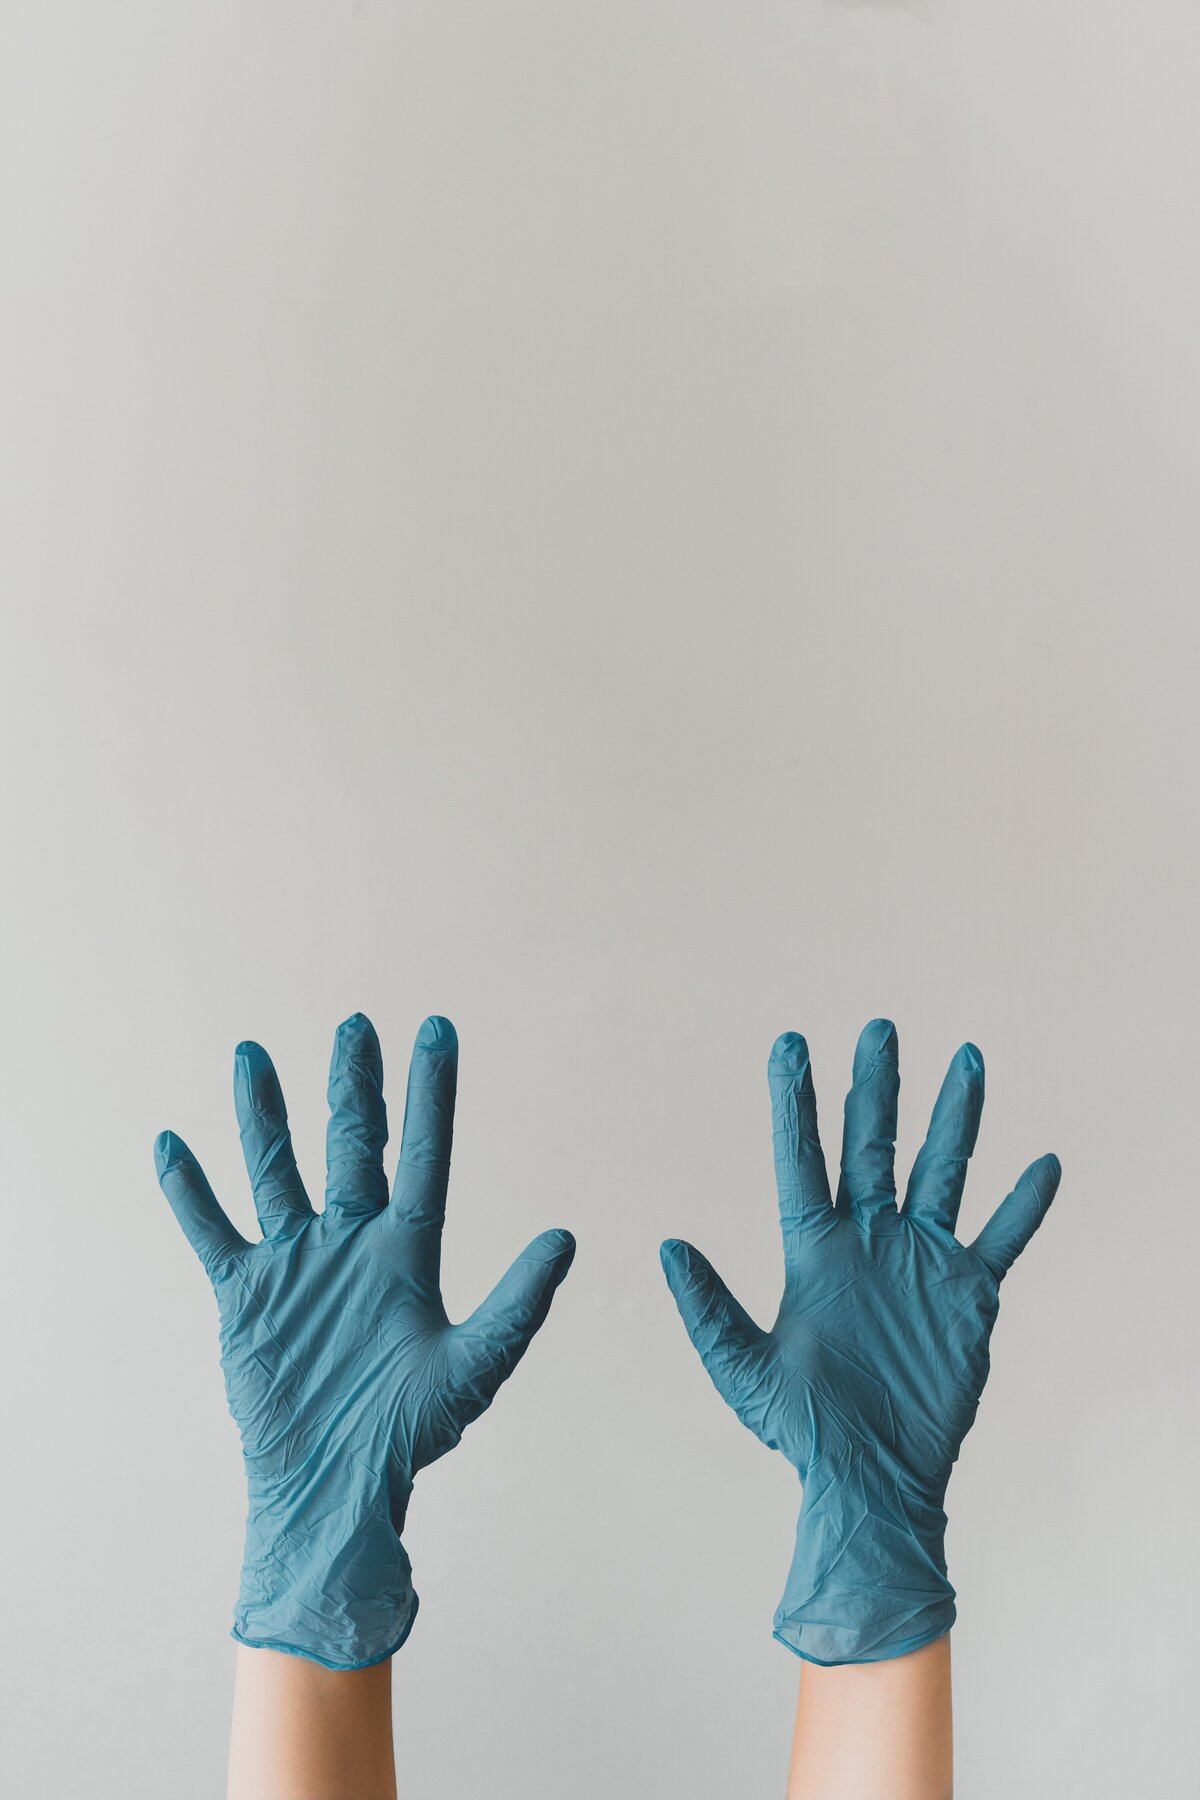 Health Specialist wearing gloves